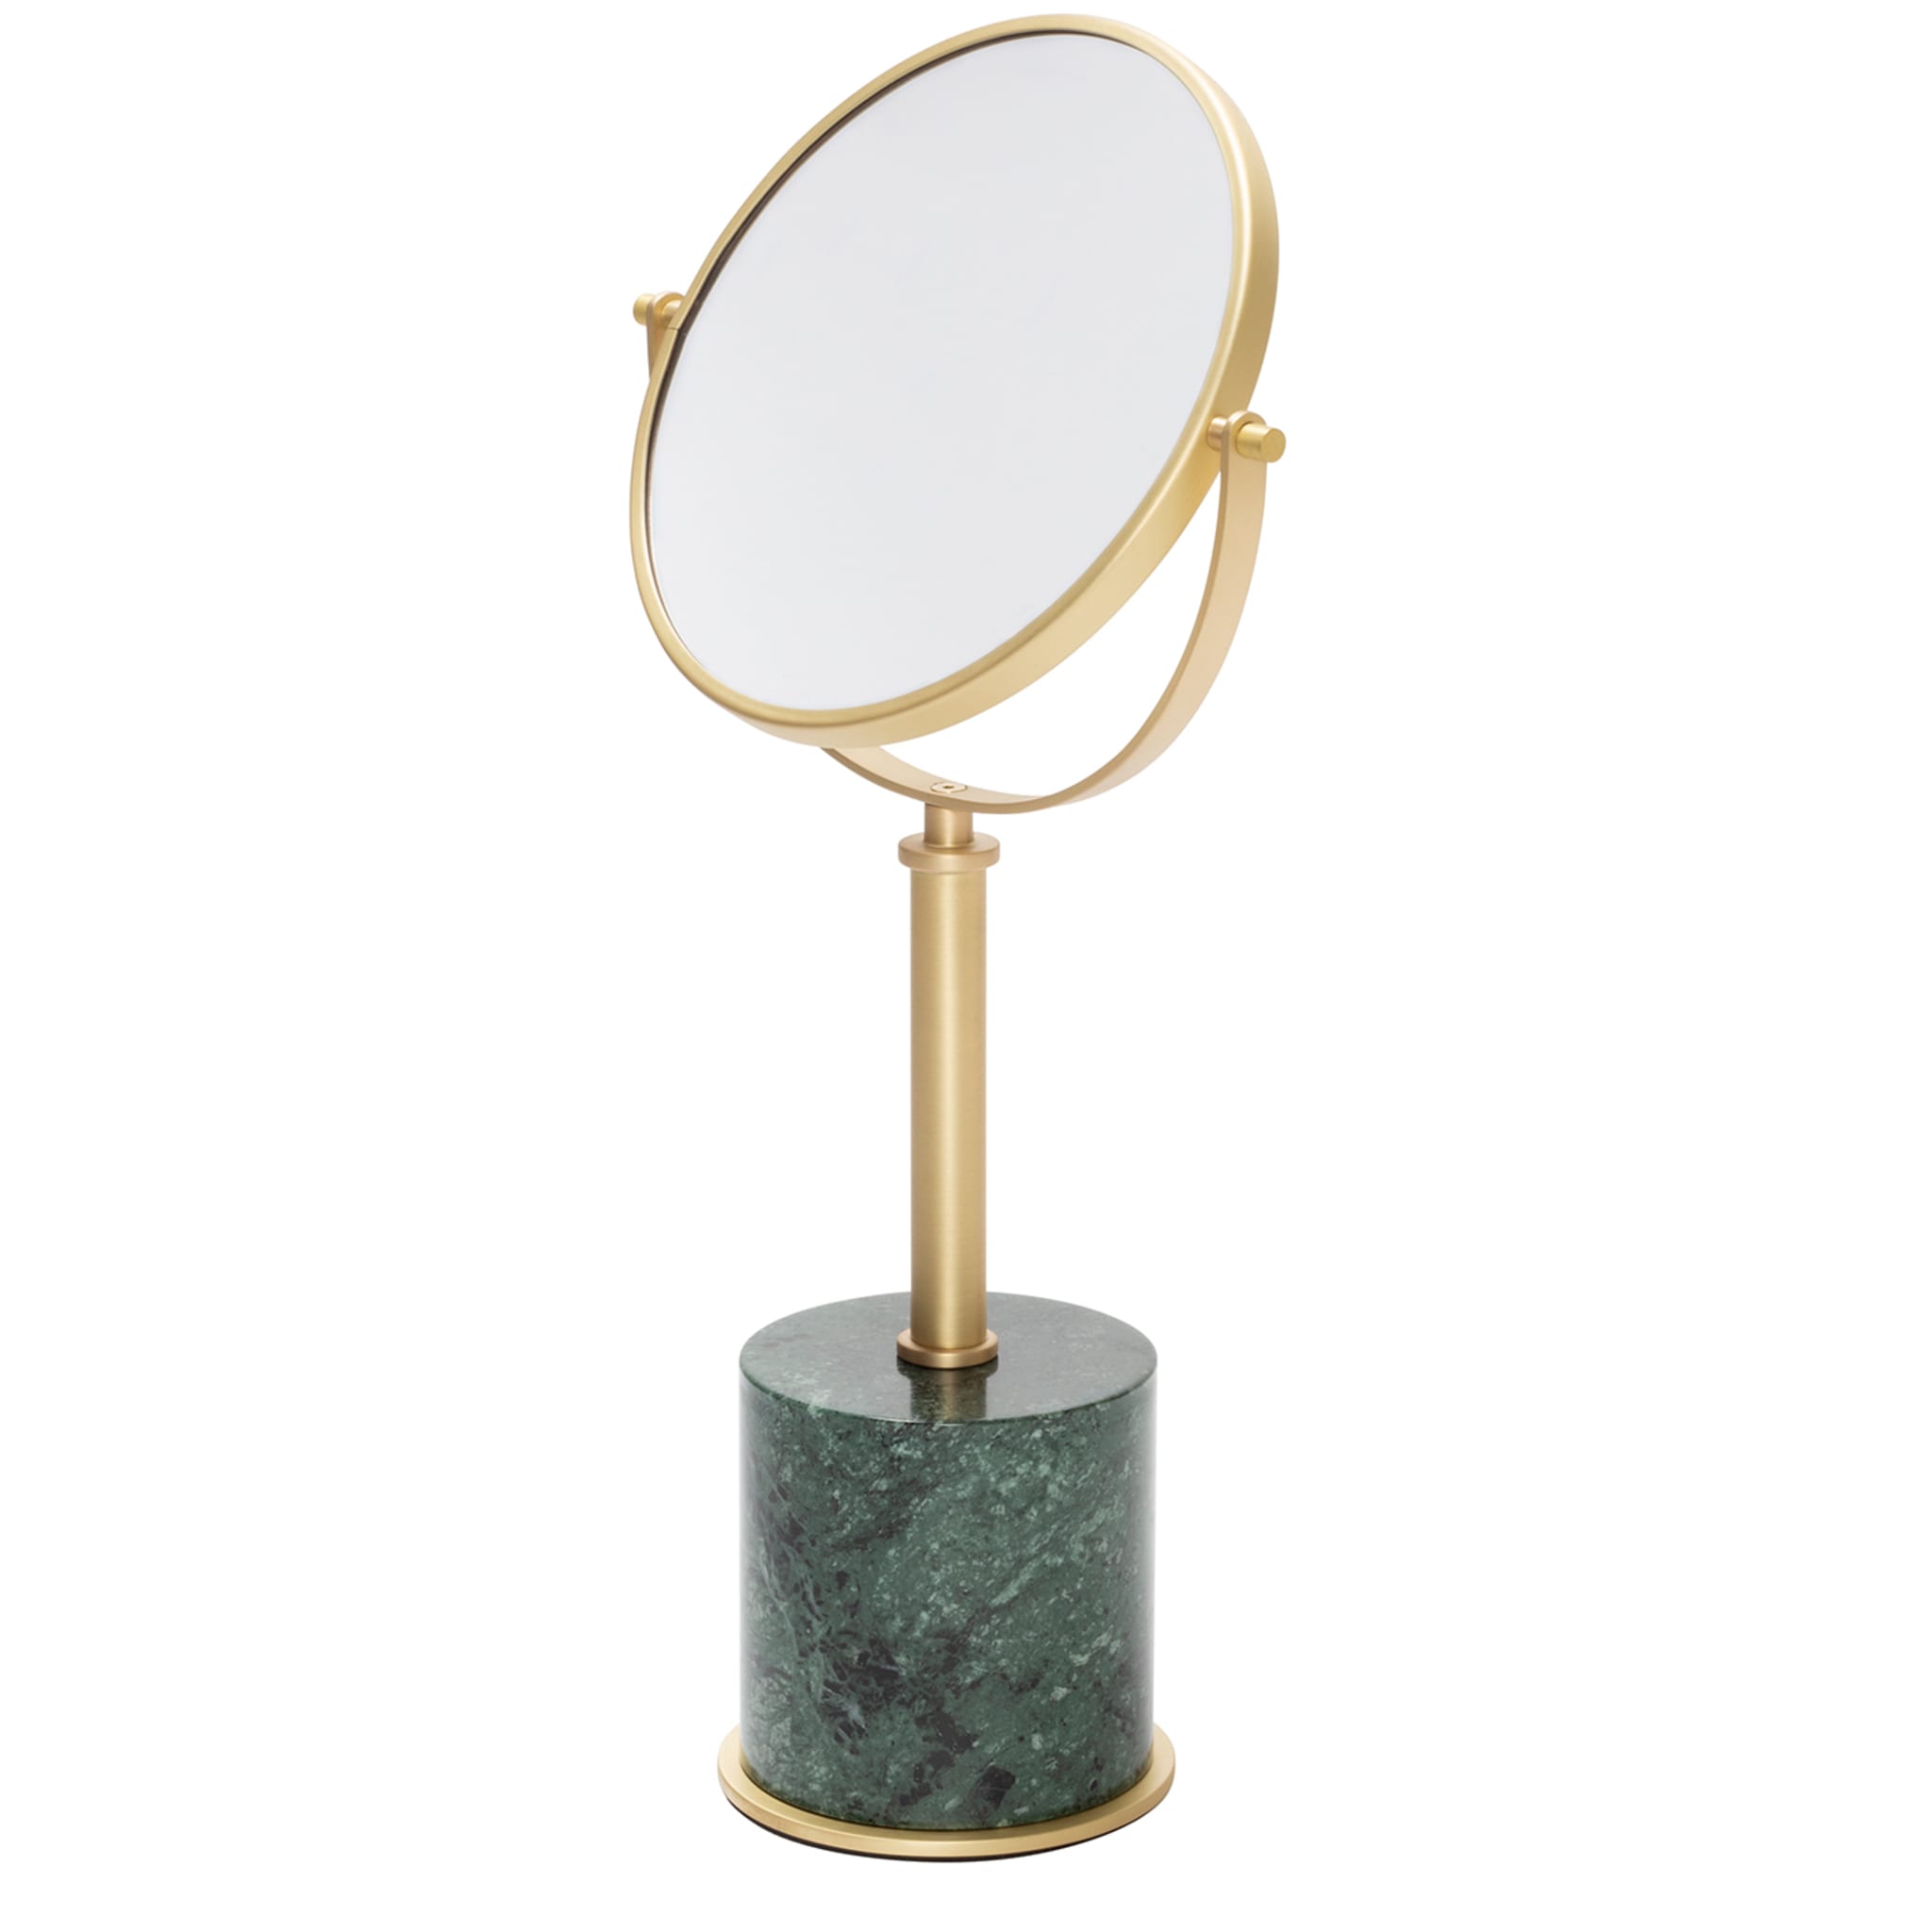 Positano Marble Freestanding Mirror #2 - Alternative view 1